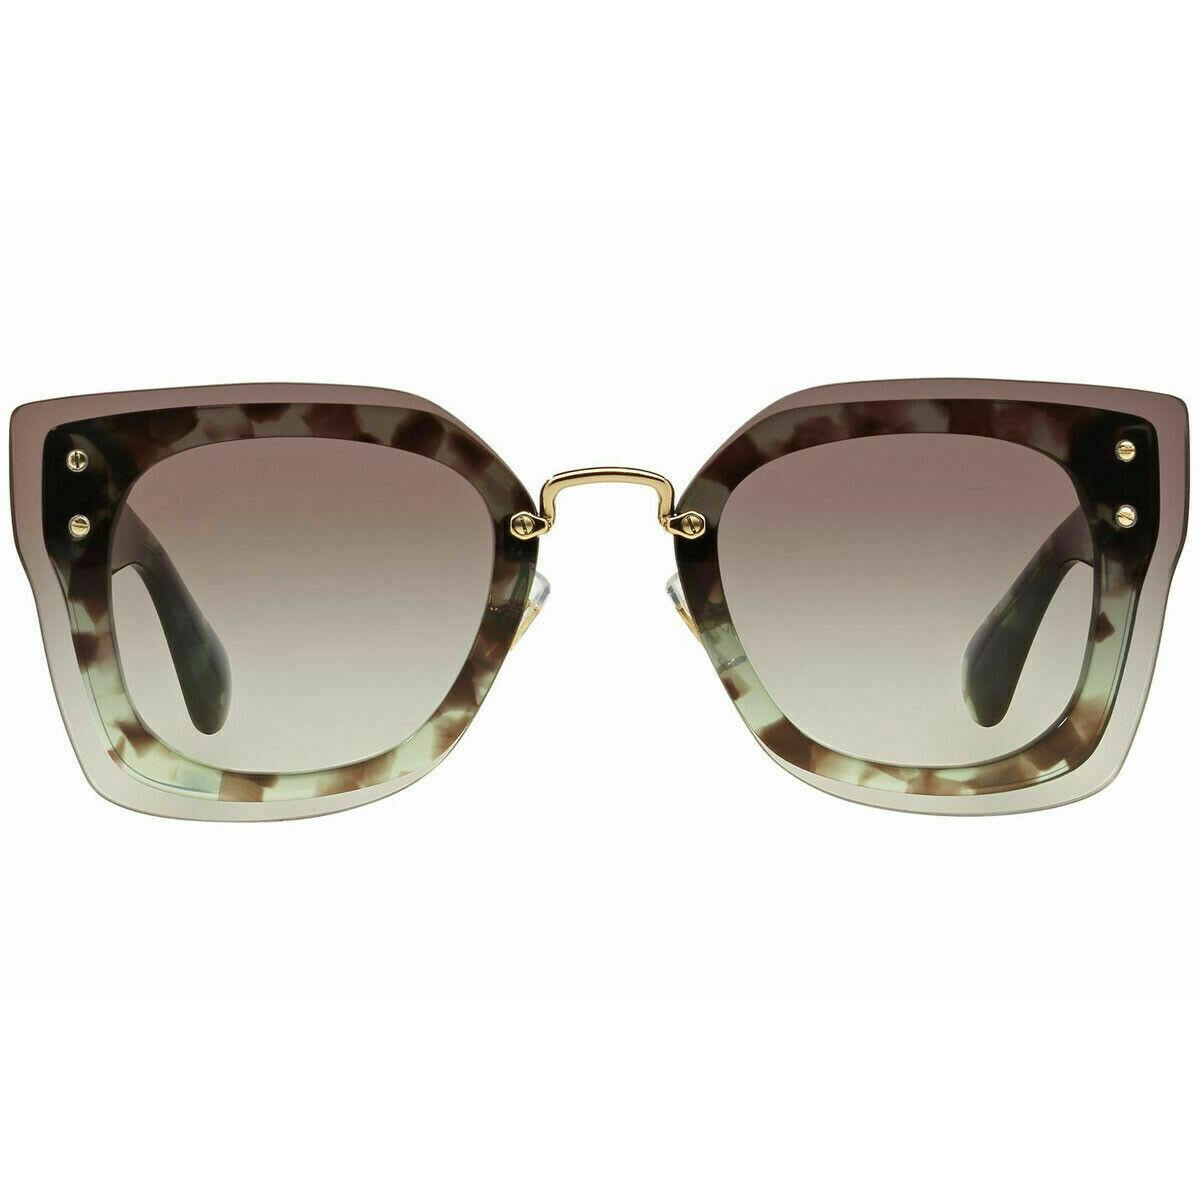 Miu Miu Sunglasses MU04RS UAG0A7 67 Green Havana /grey Gradient 67mm